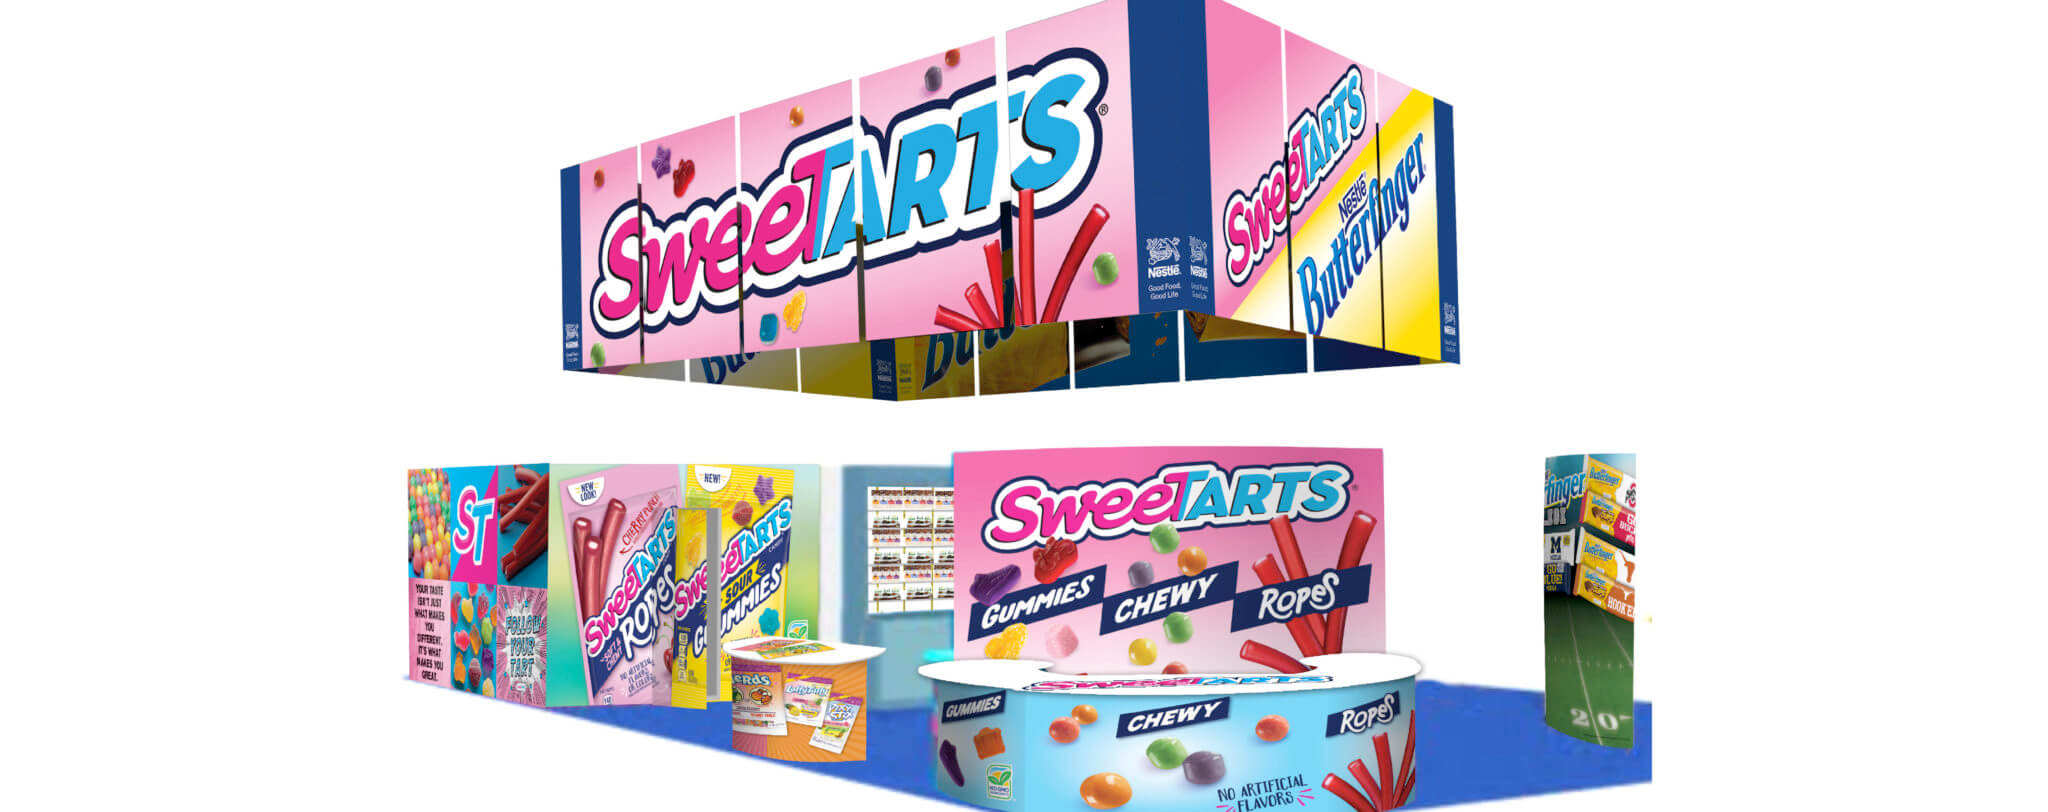 sweet-snacks-expo-image-top